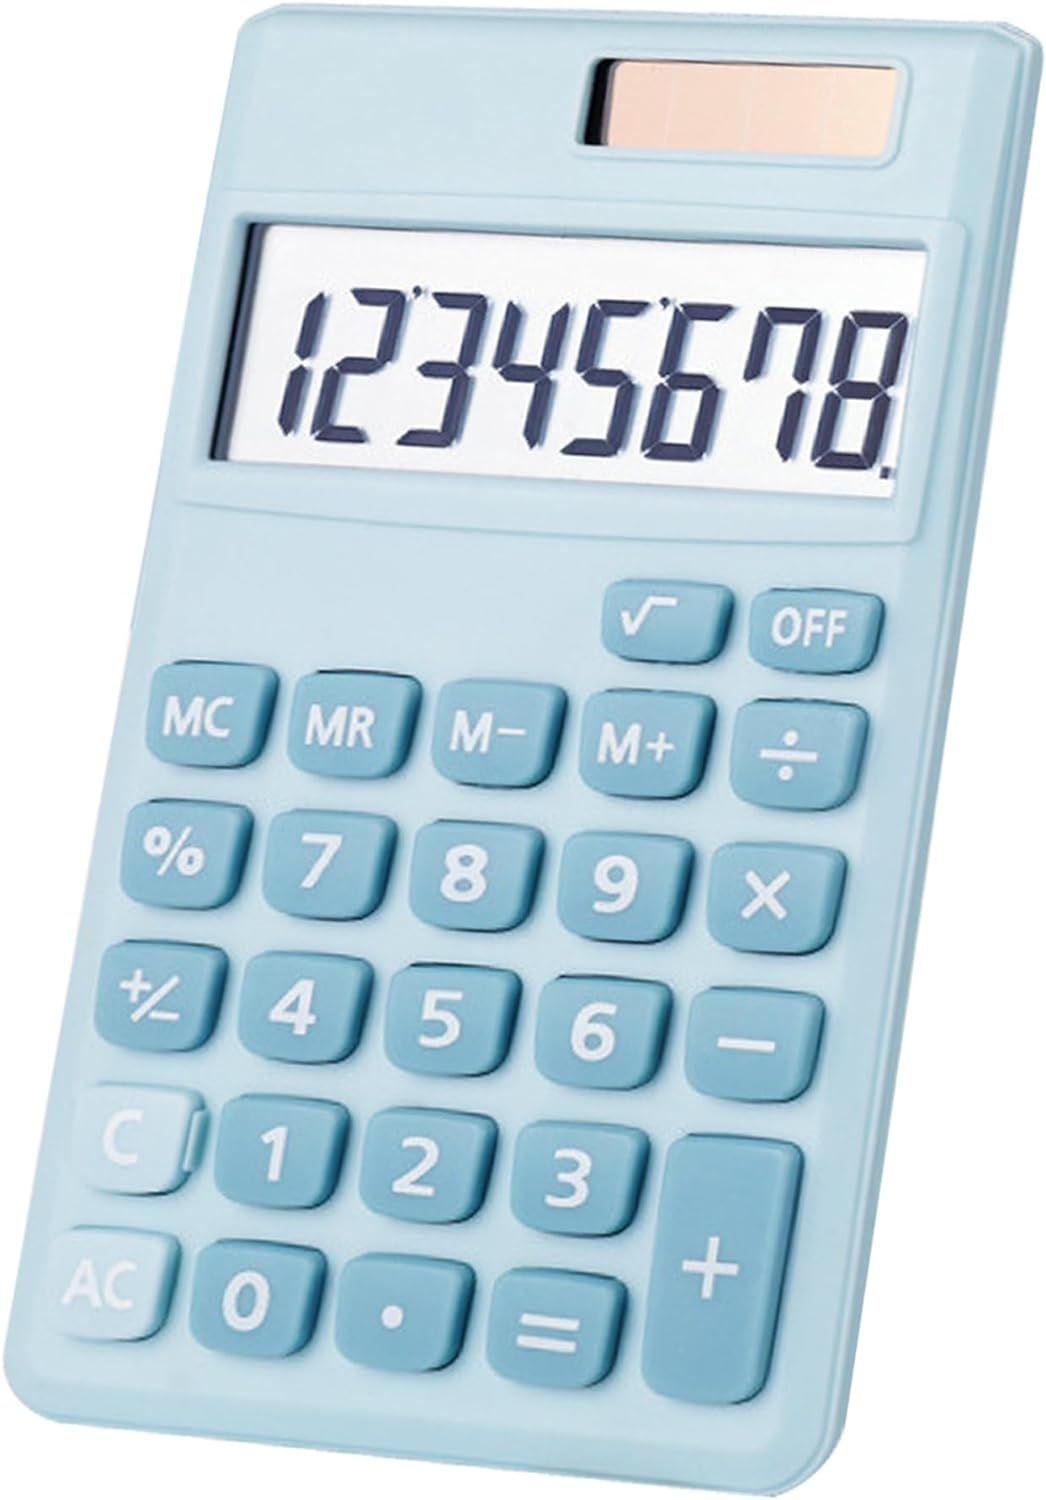 Basic Calculator, Desktop Cute Pocket Size Mini Calculators for School, Office, Home (Light Blue) | Amazon (US)